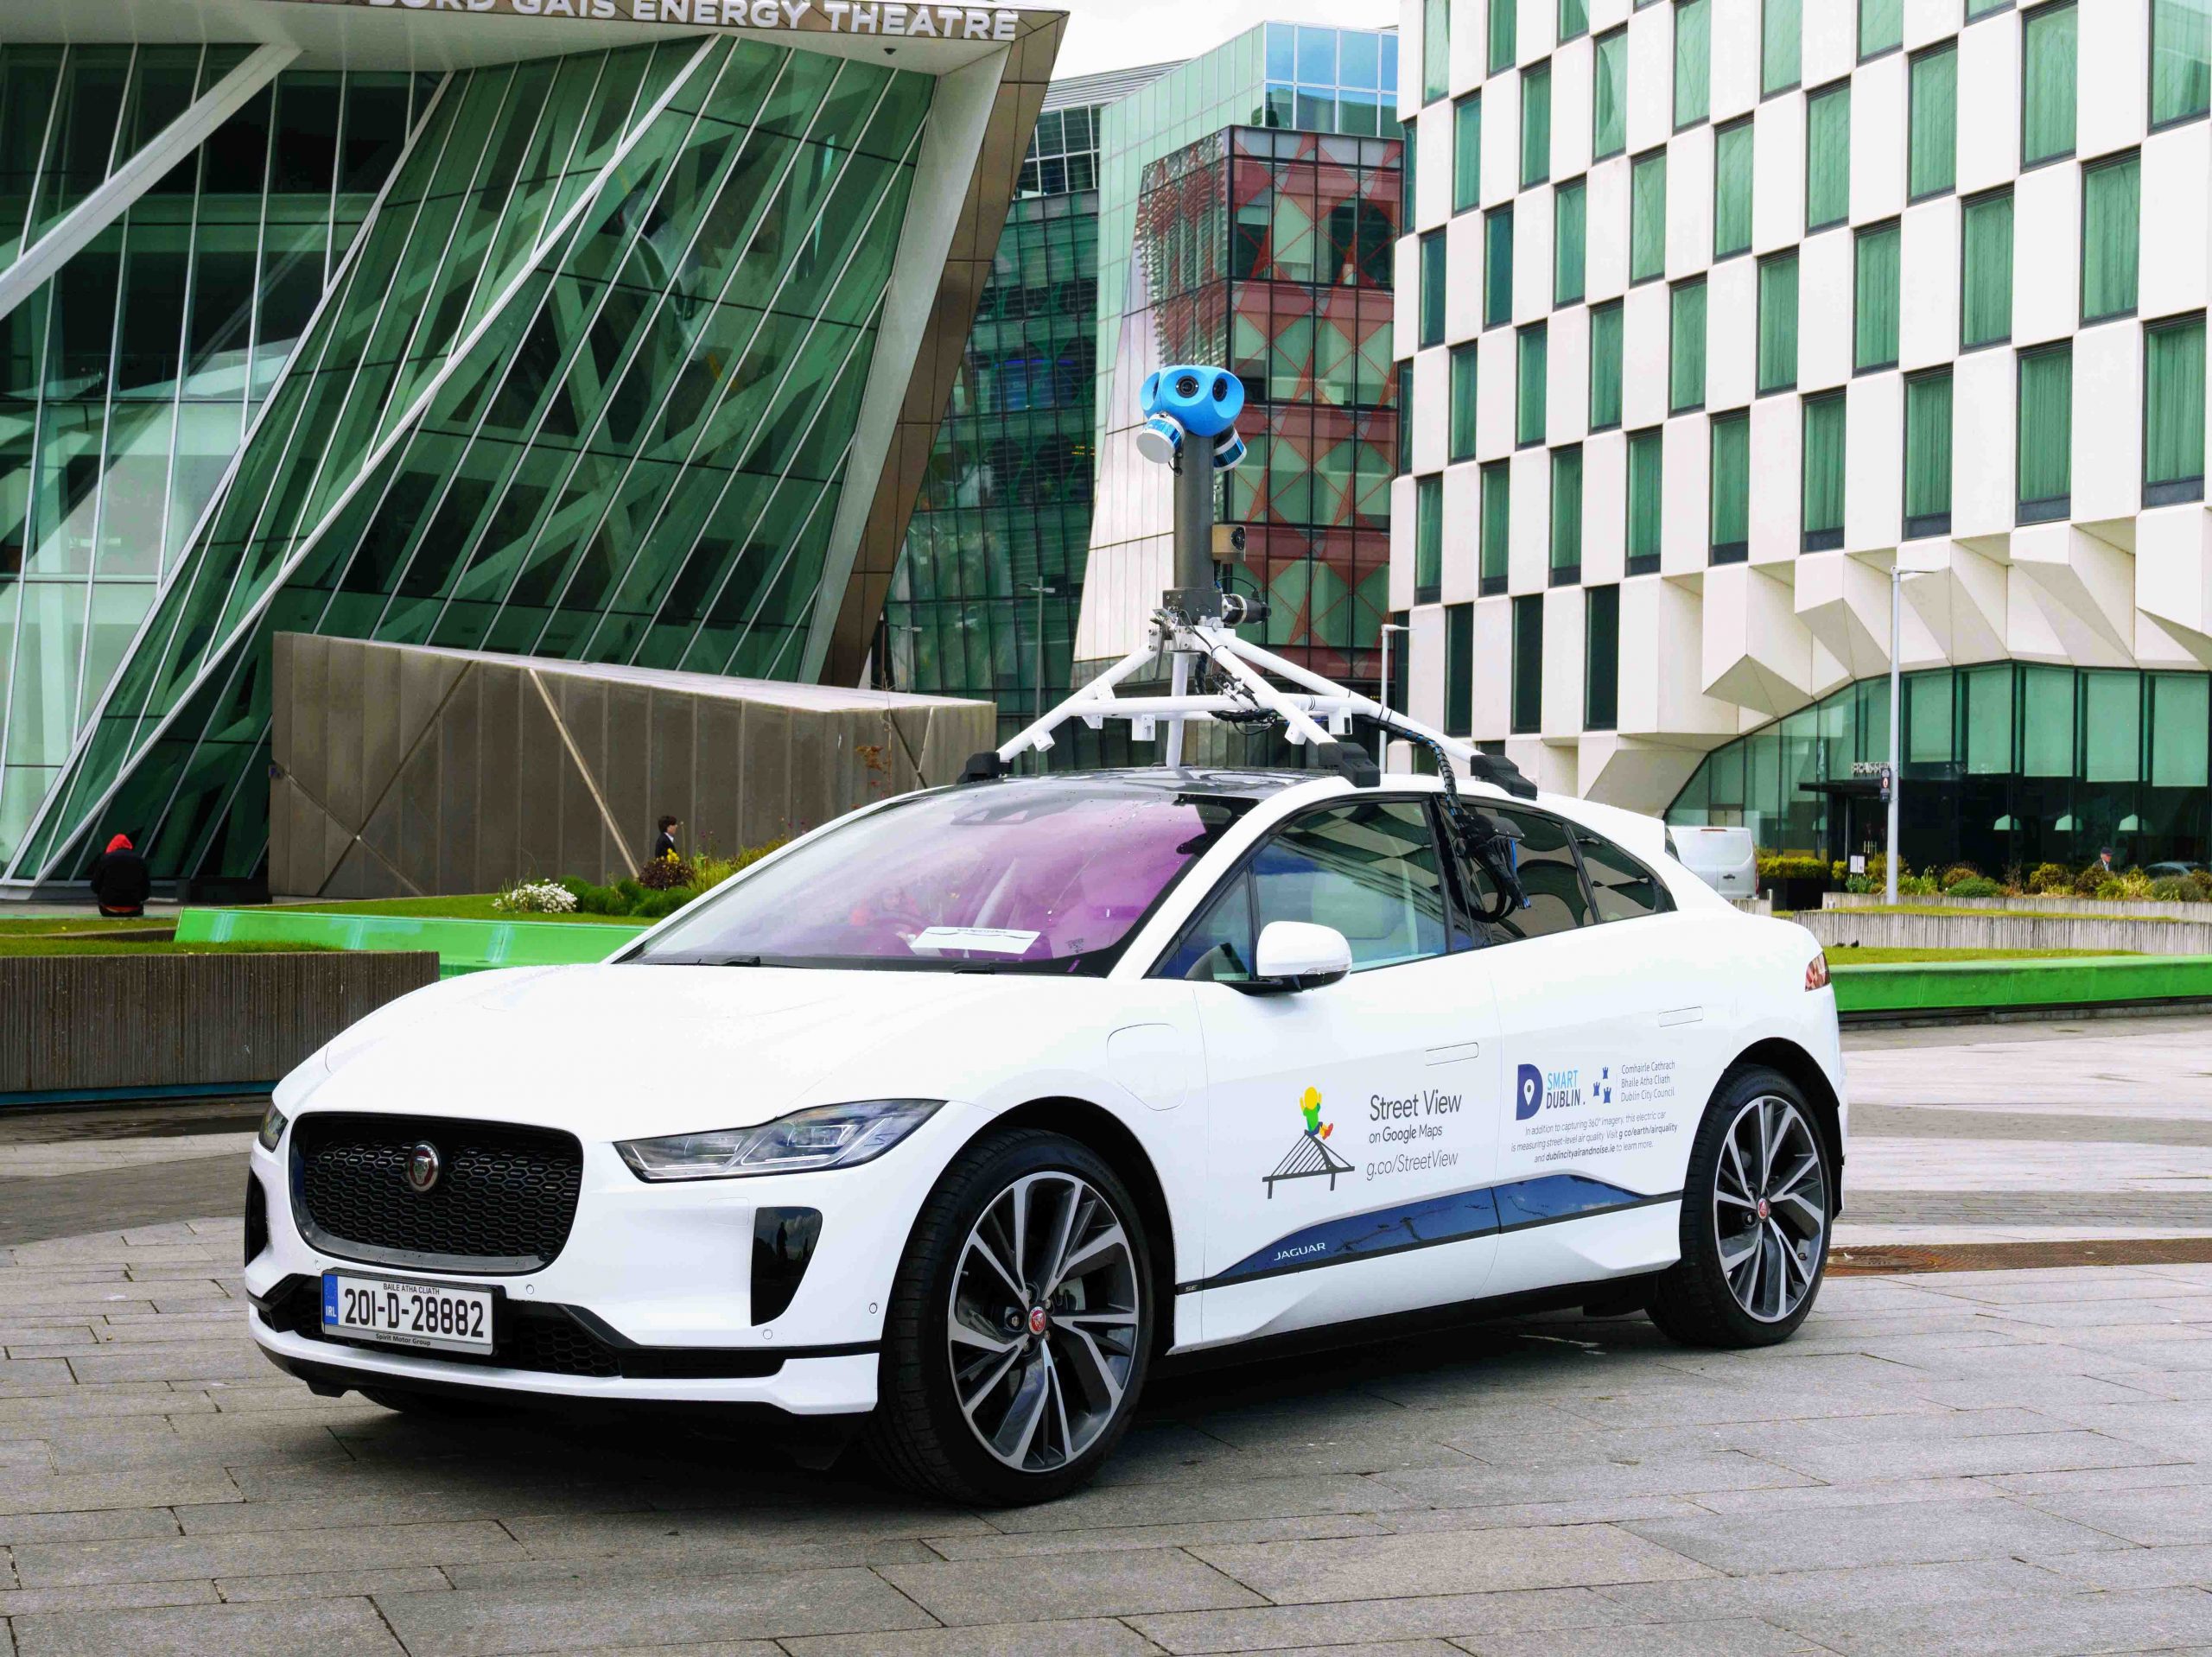 Jaguar + Google = Air View Dublin